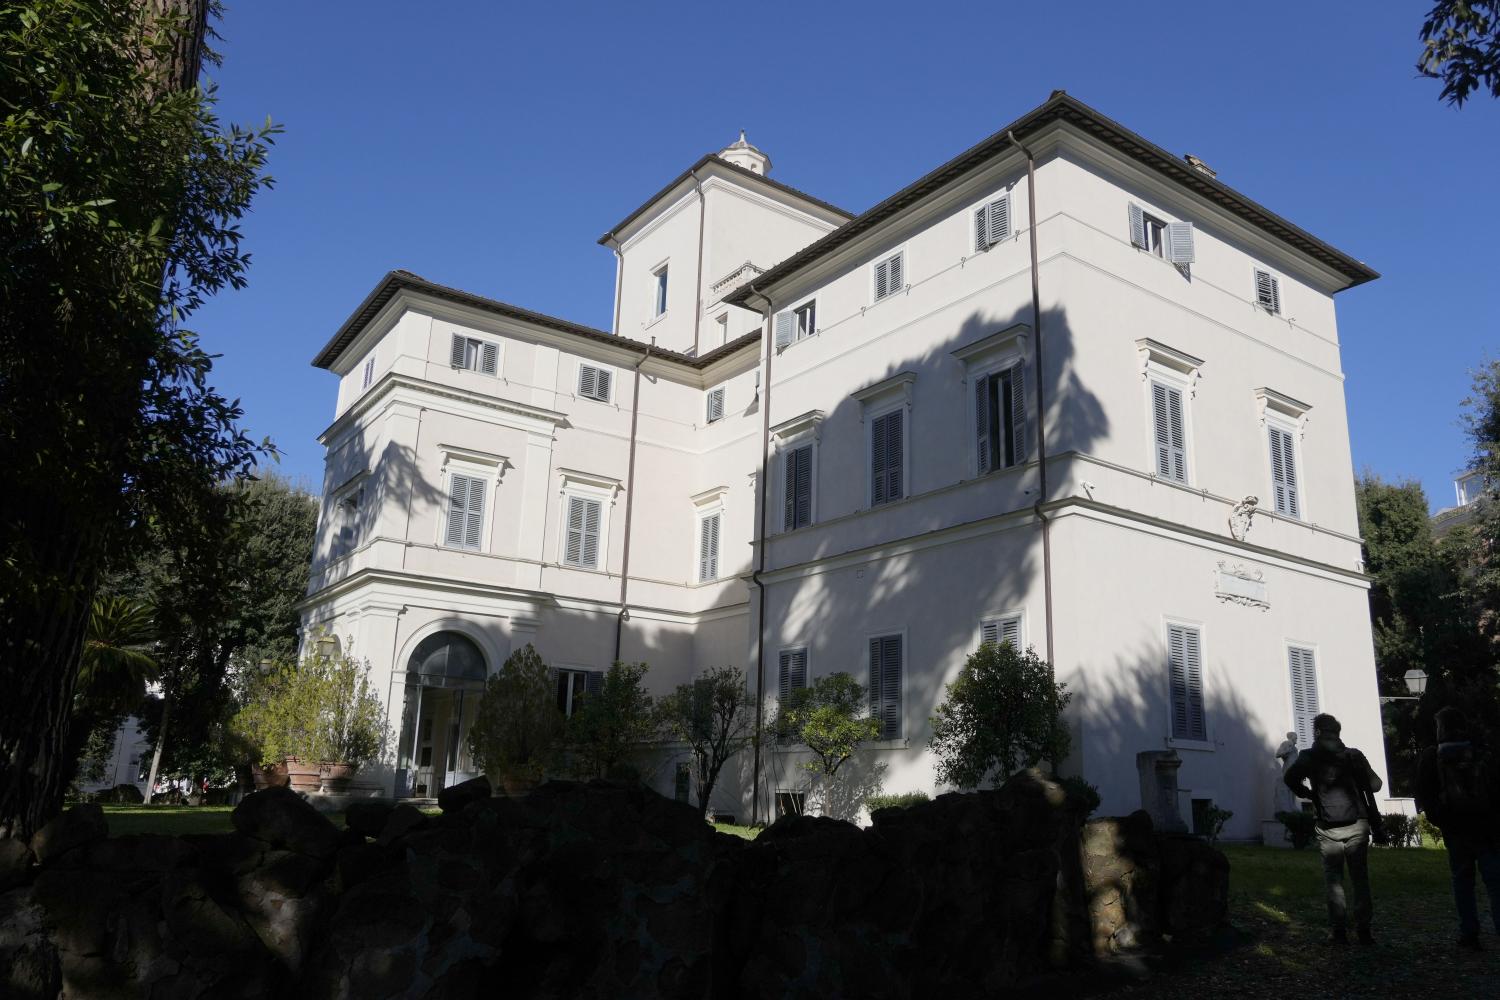 Villa Ludovisi, auch bekannt unter dem Namen Casino dell'Aurora, Rom